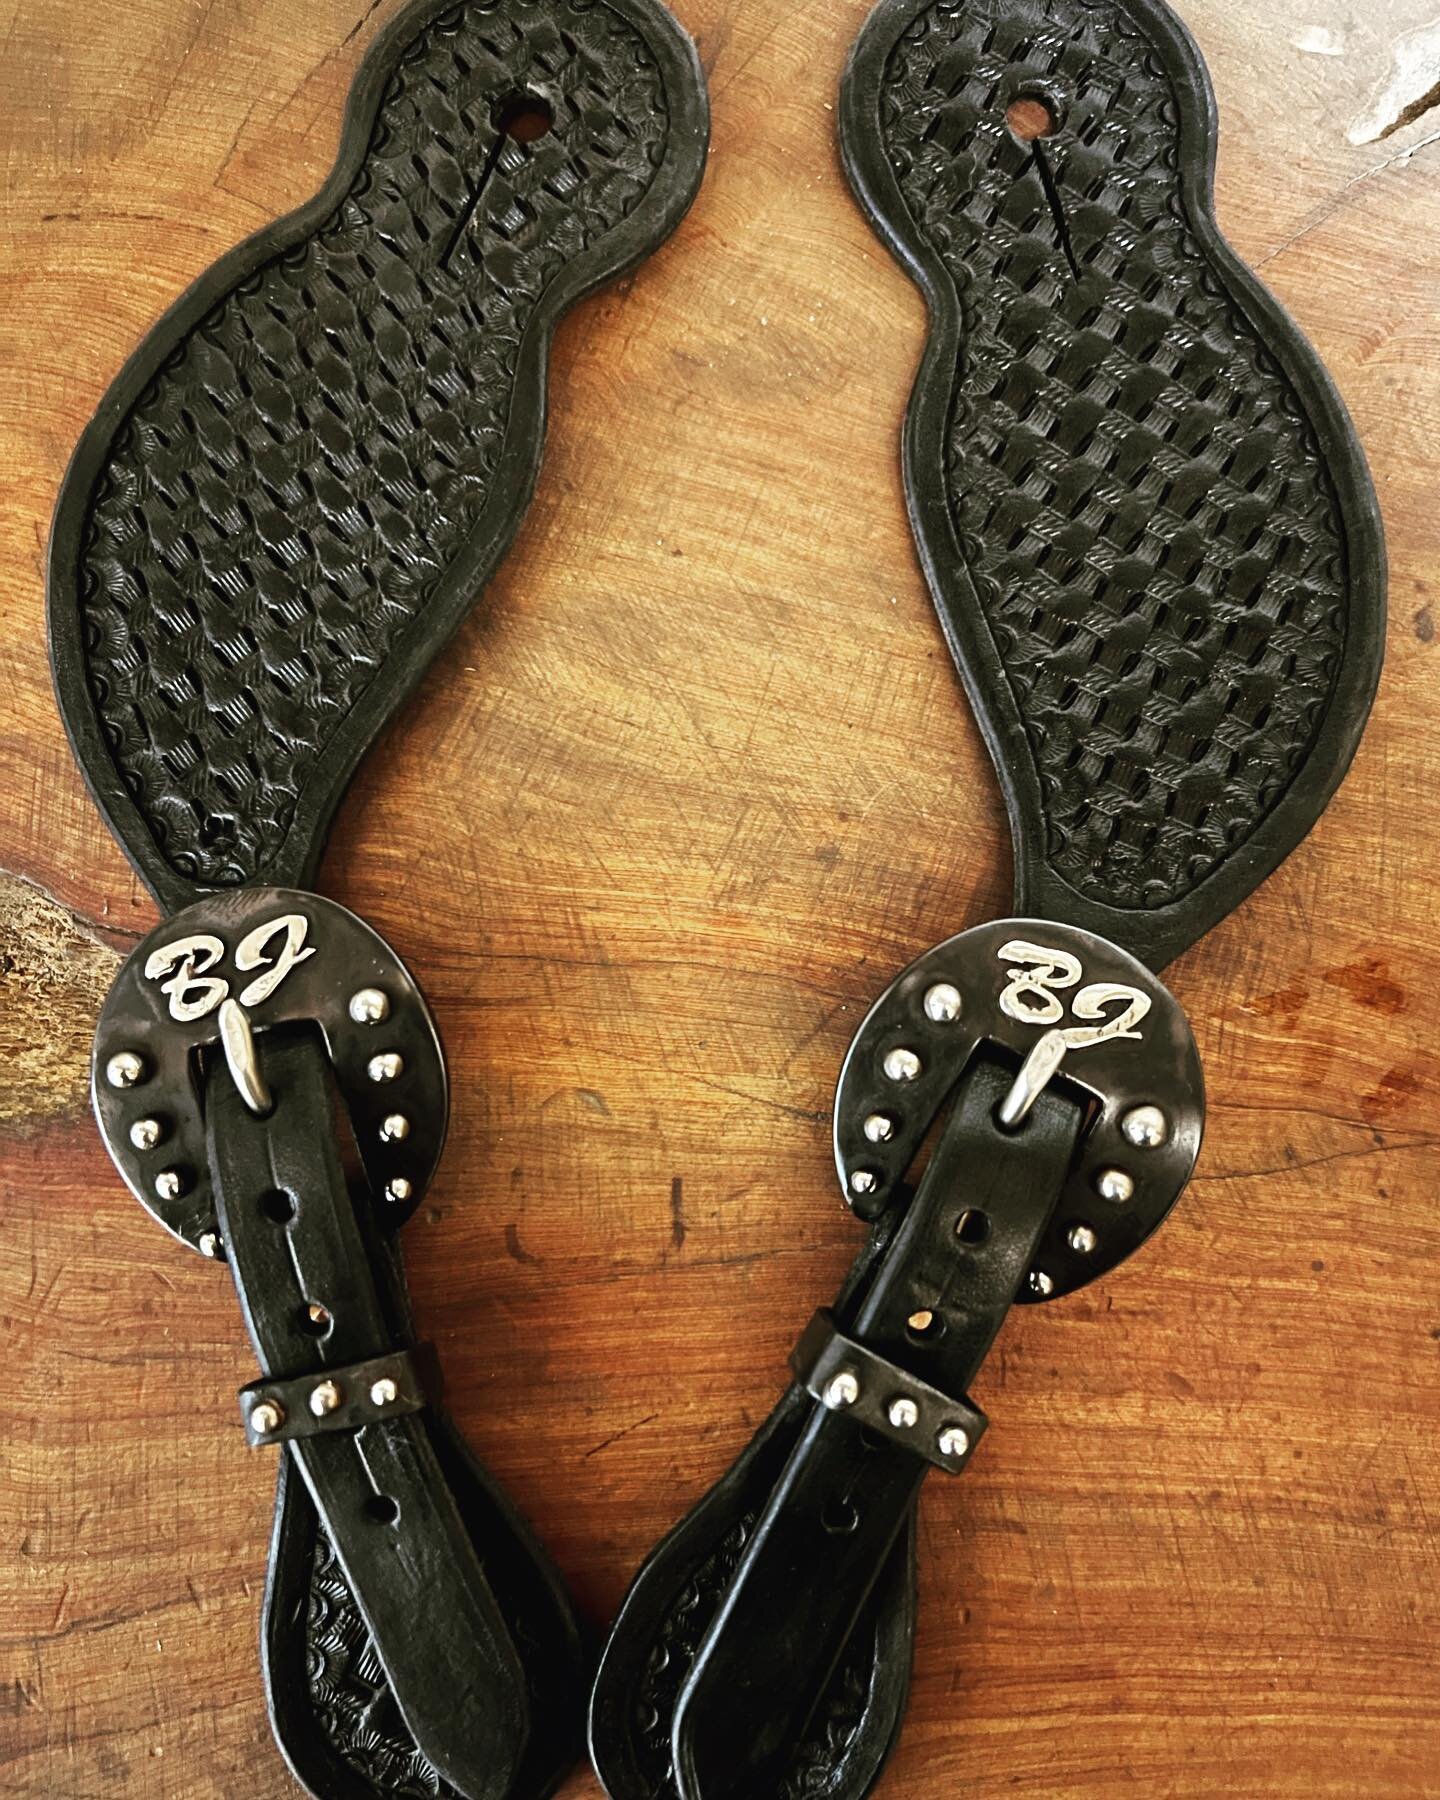 Spur straps &amp; buckles for all different styles 😍

#tmbitsandspurs #bits #spurs #custombits #custom #handmade #rodeo #horsetraining #roping #barrelracing #tack #calfroping #tiedownroping #breakaway #teamroping #snafflebit #ropingbit #shank #port 